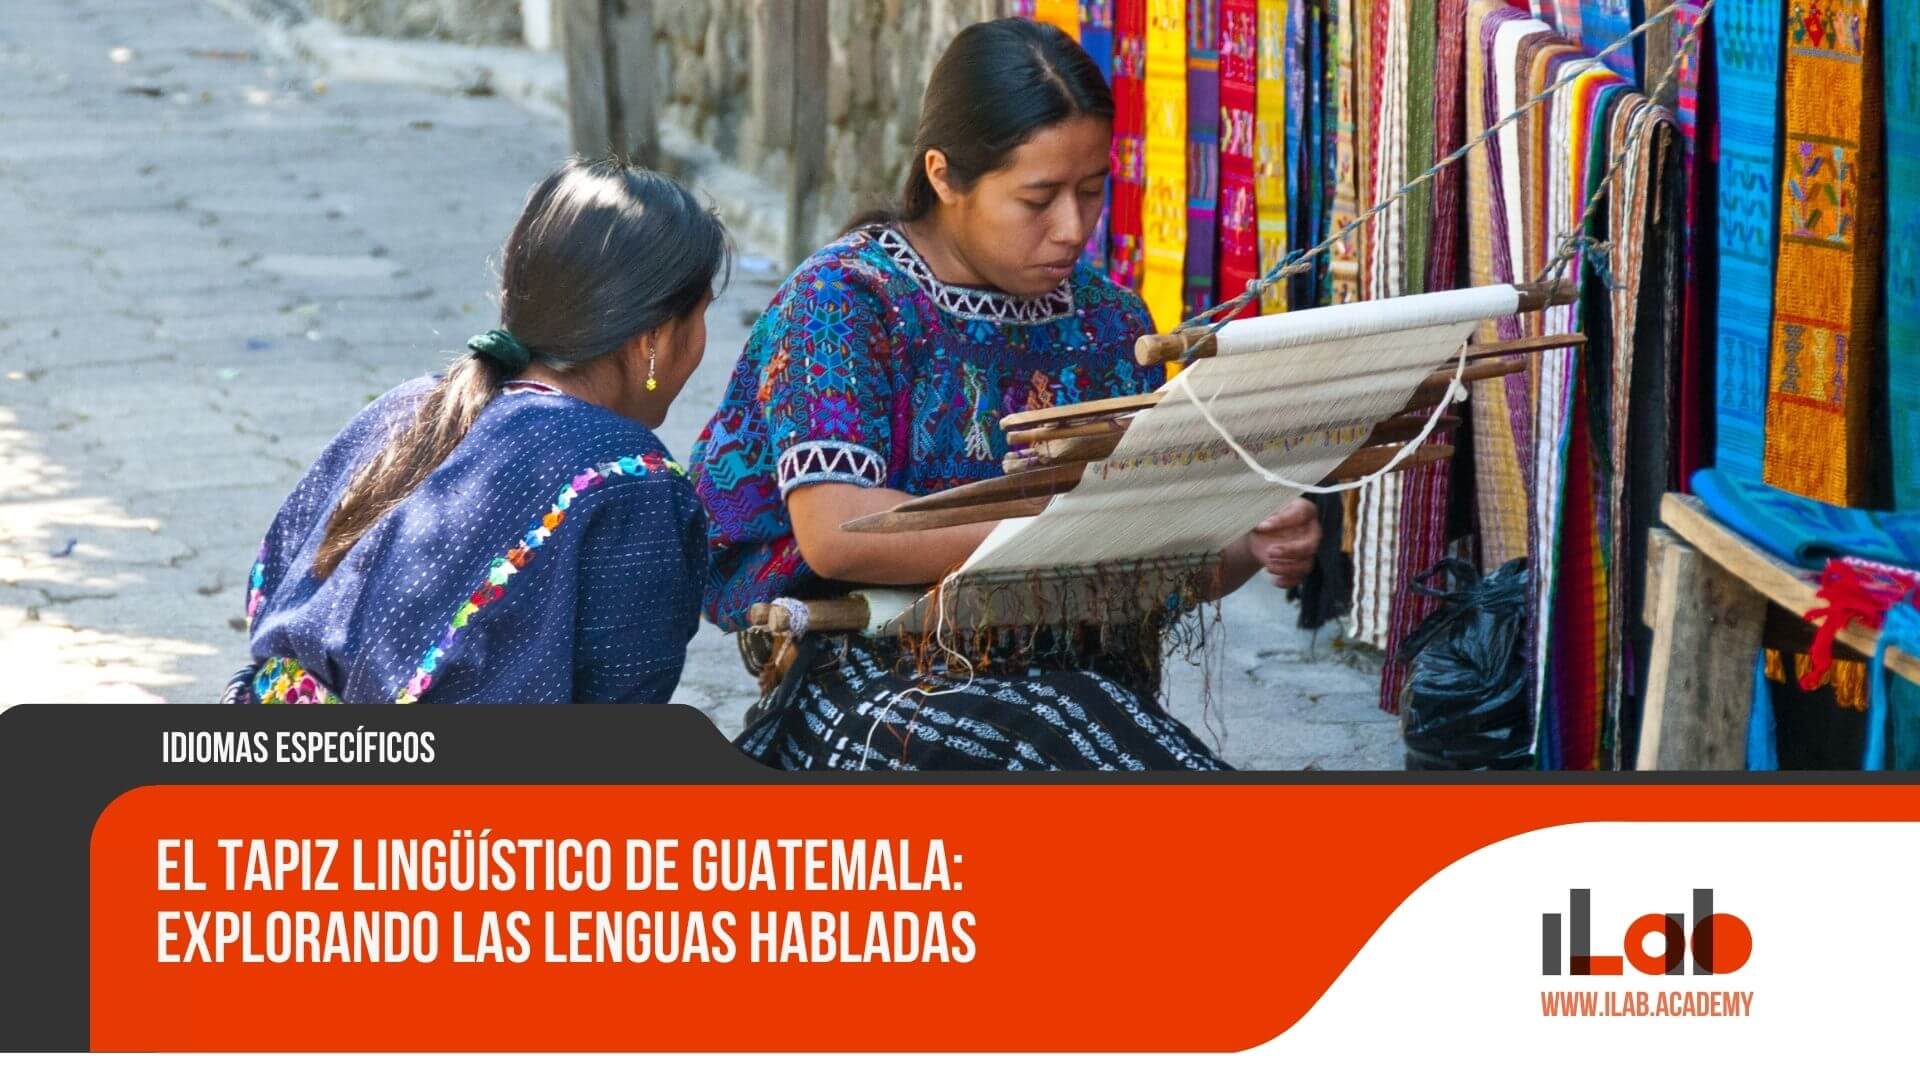 El tapiz lingüístico de Guatemala: Explorando las lenguas habladas